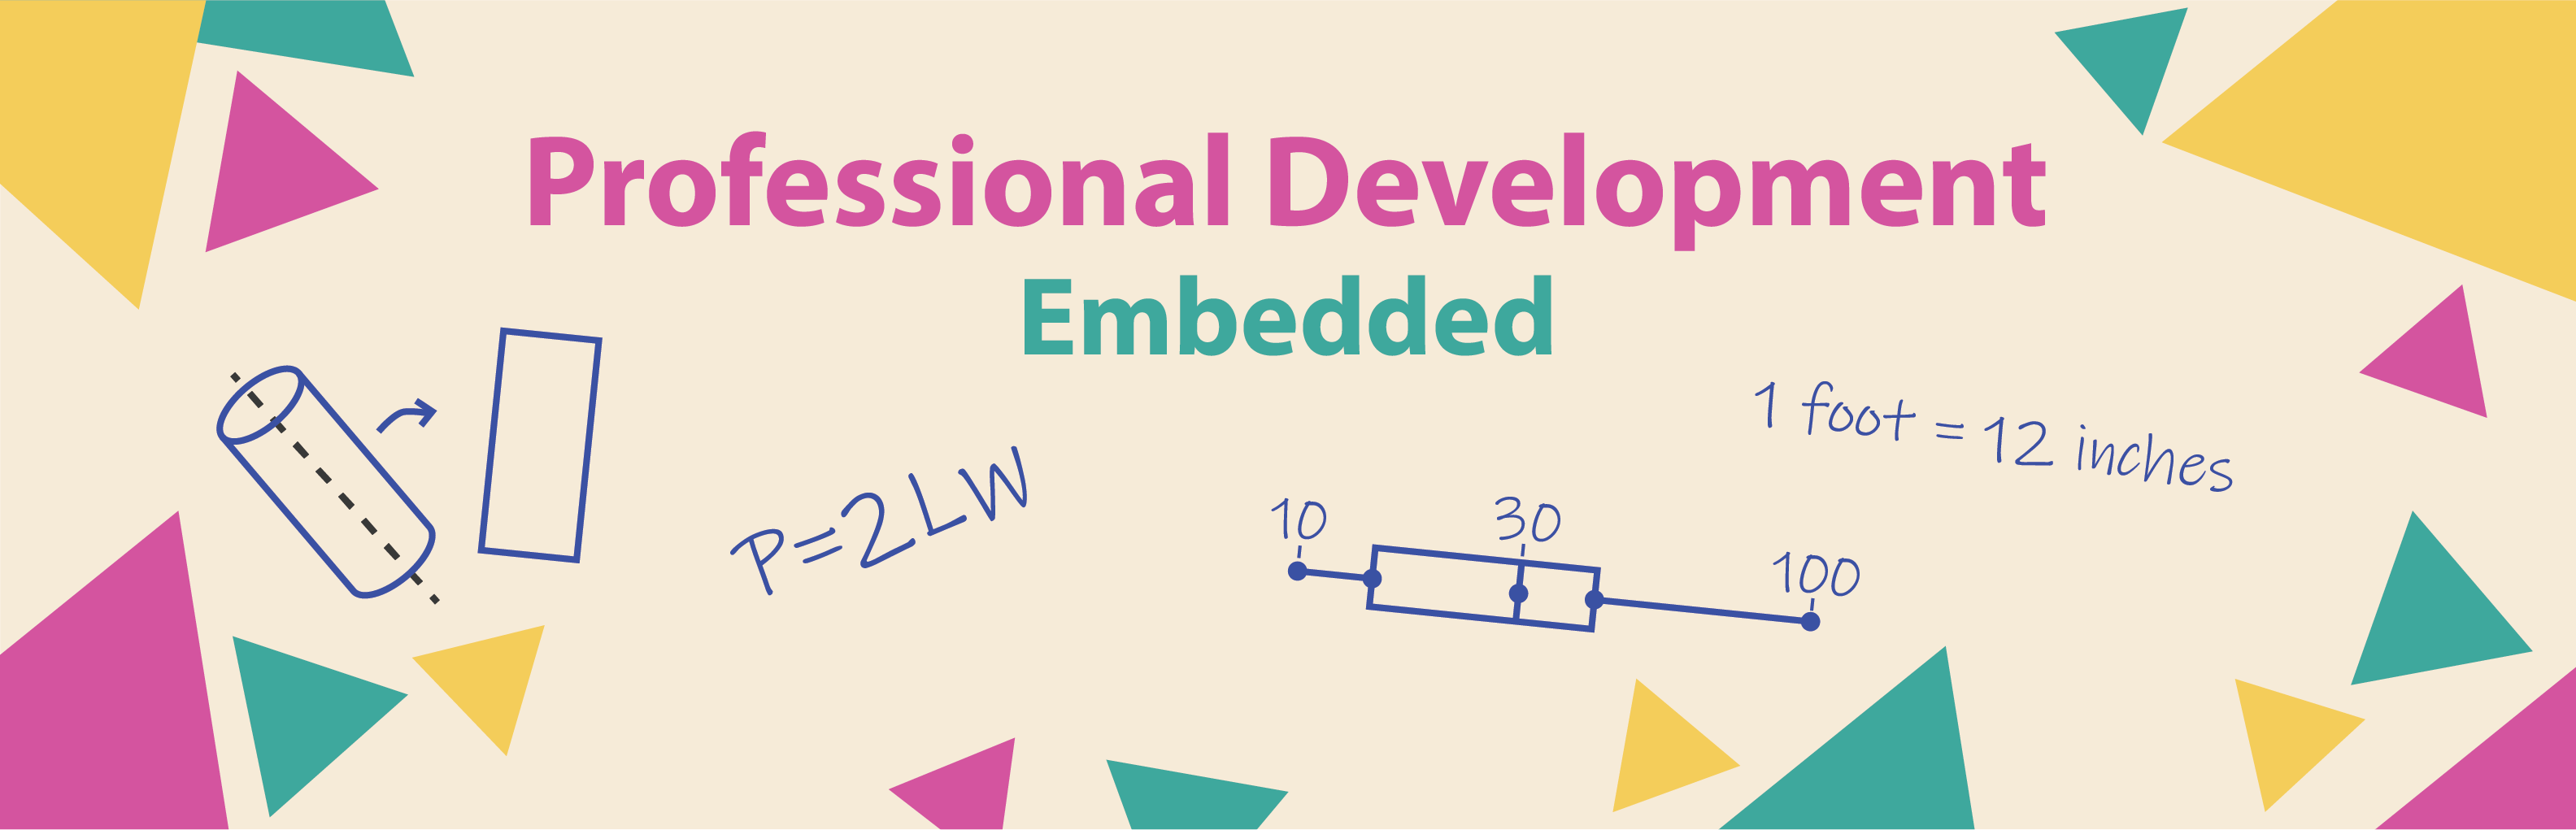 Embedded Professional Development